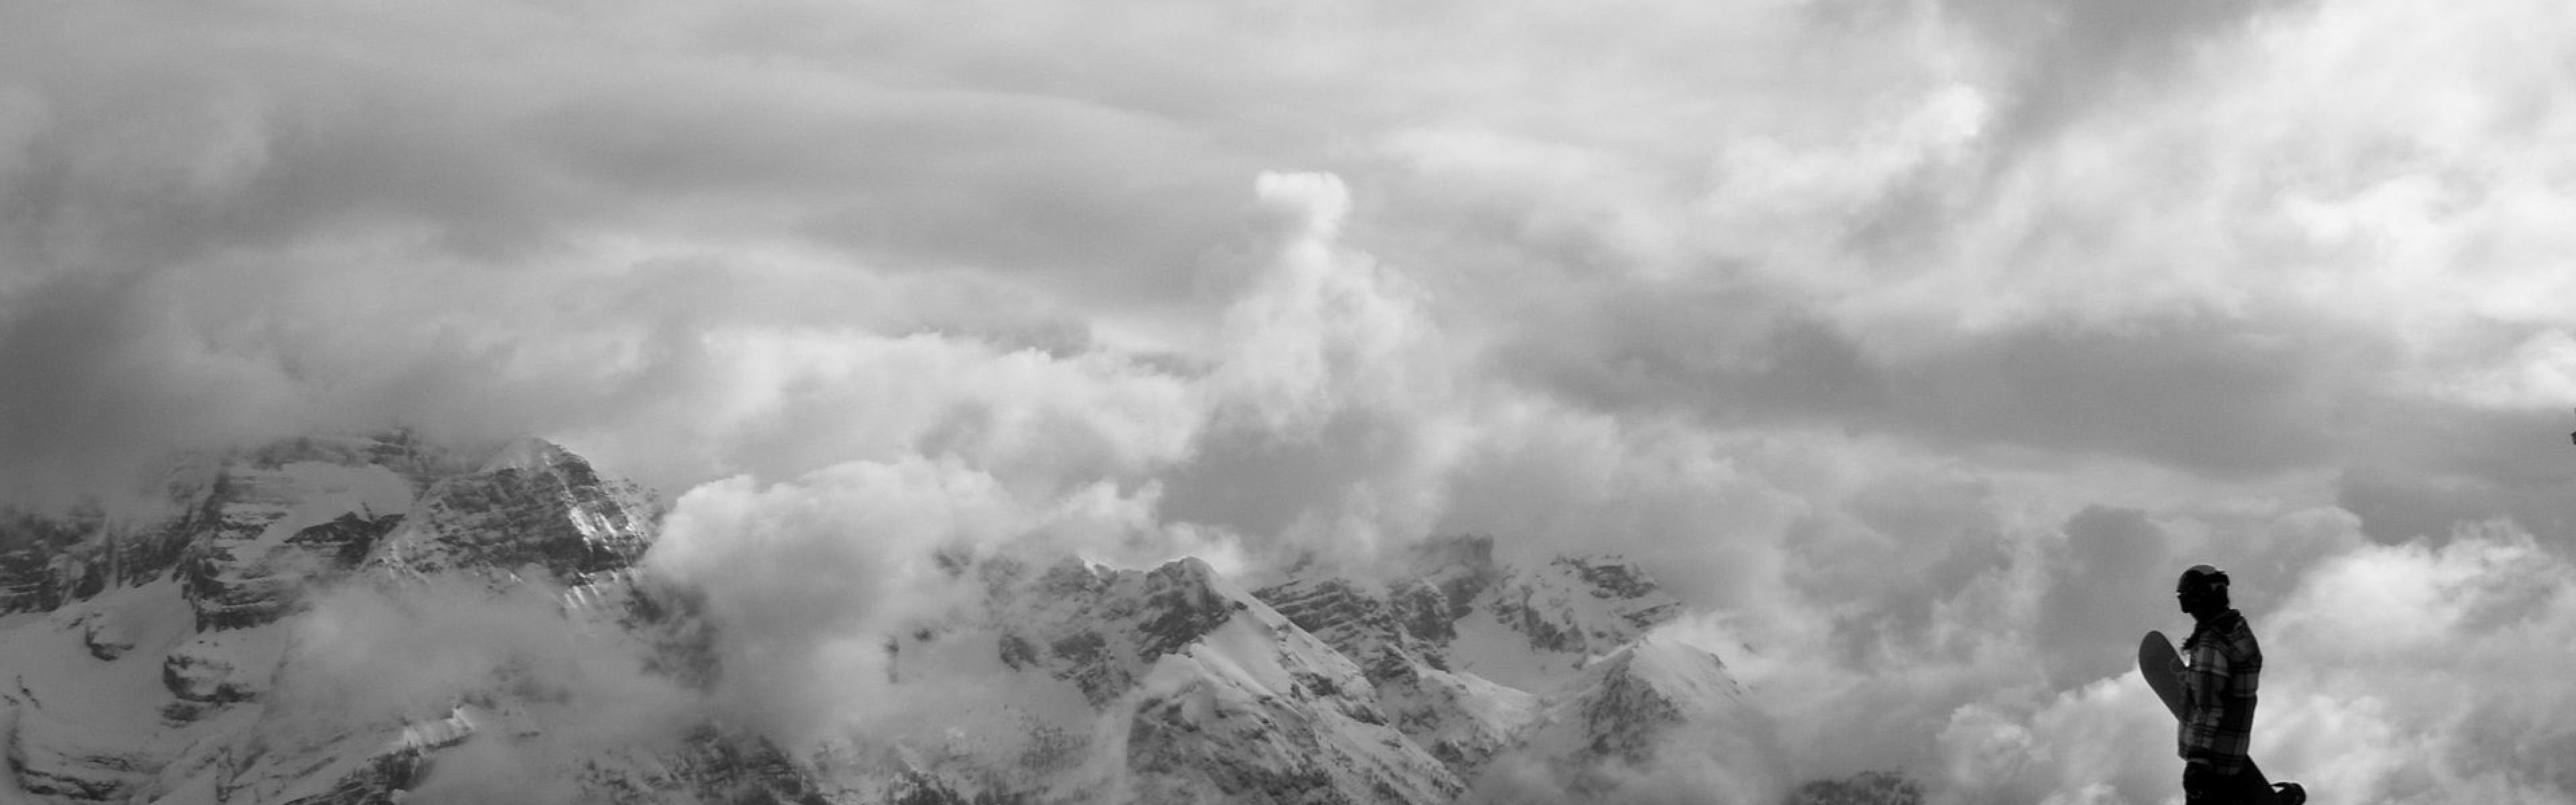 Download Wallpaper 3840x1200 Mountain, Snowboard, Top, Fog ...